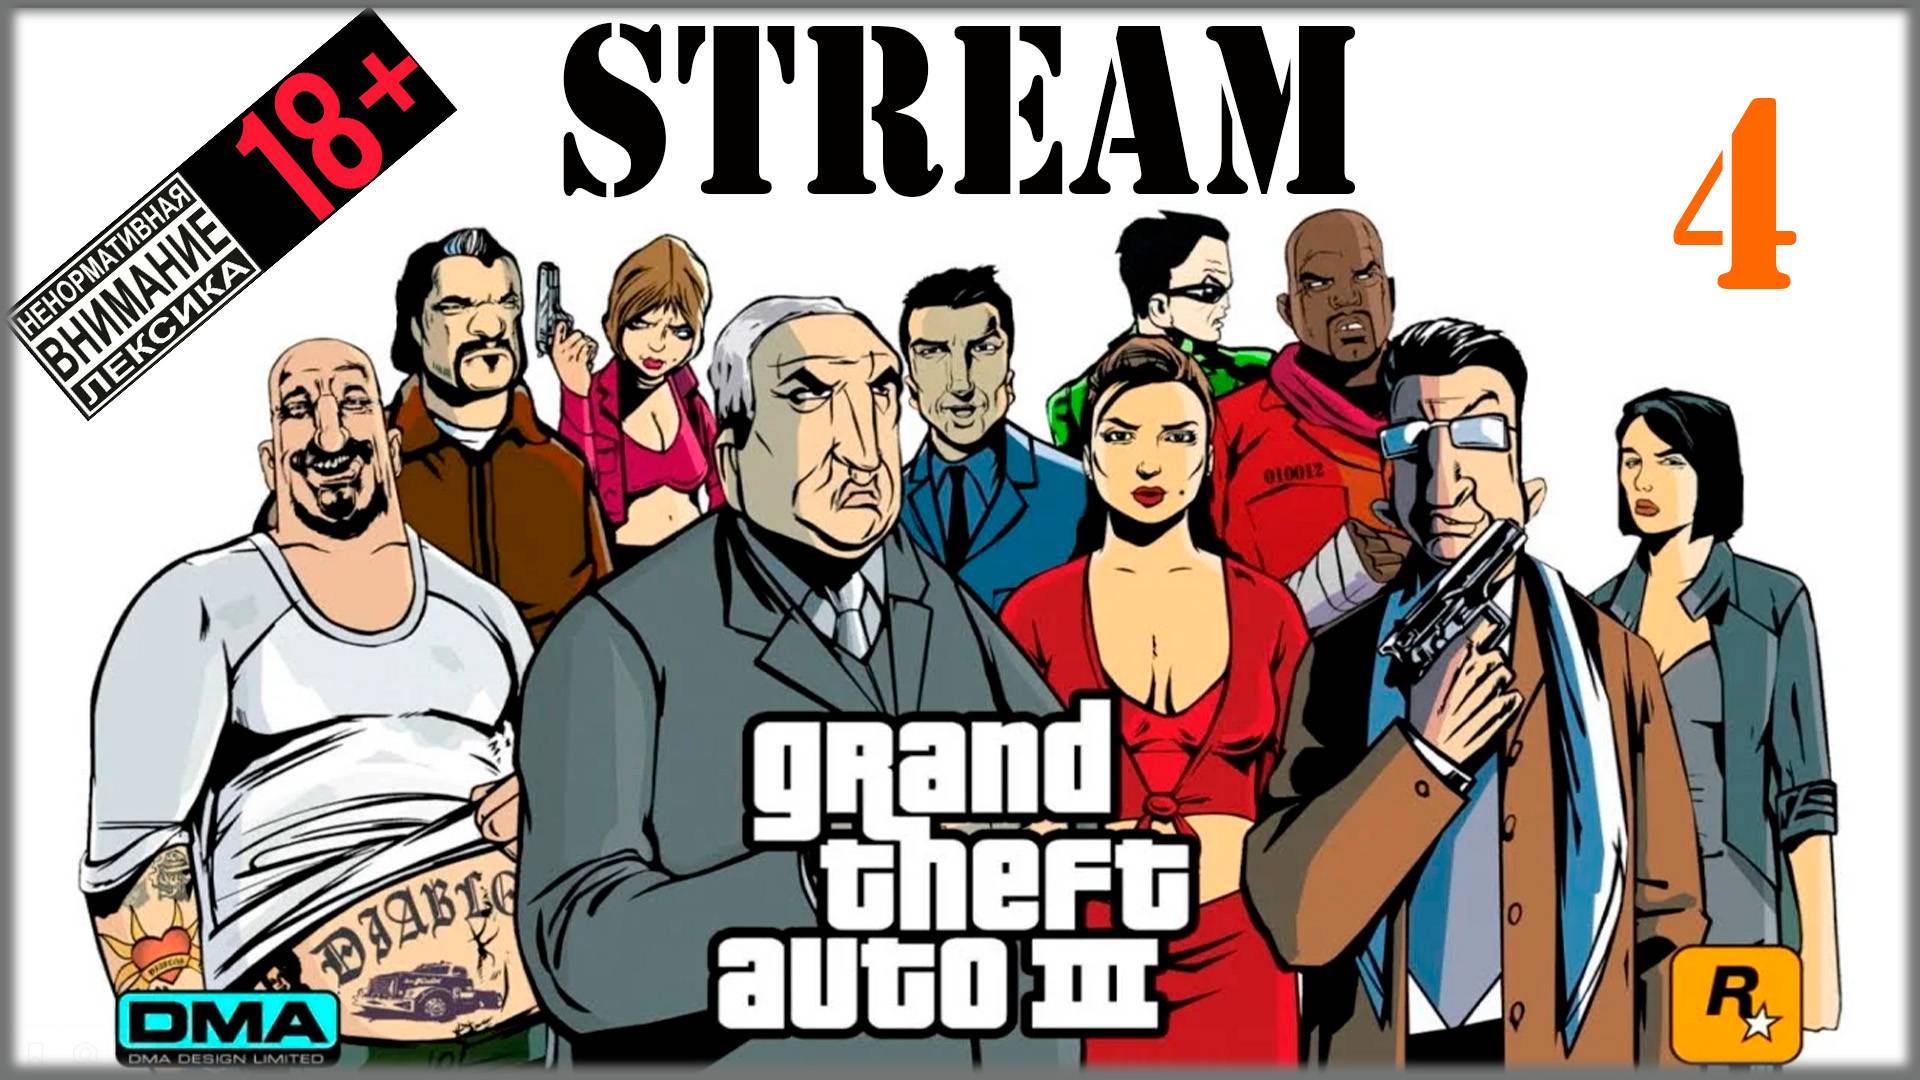 Stream - Grand Theft Auto III: The Definitive Edition #4 Асука и Король